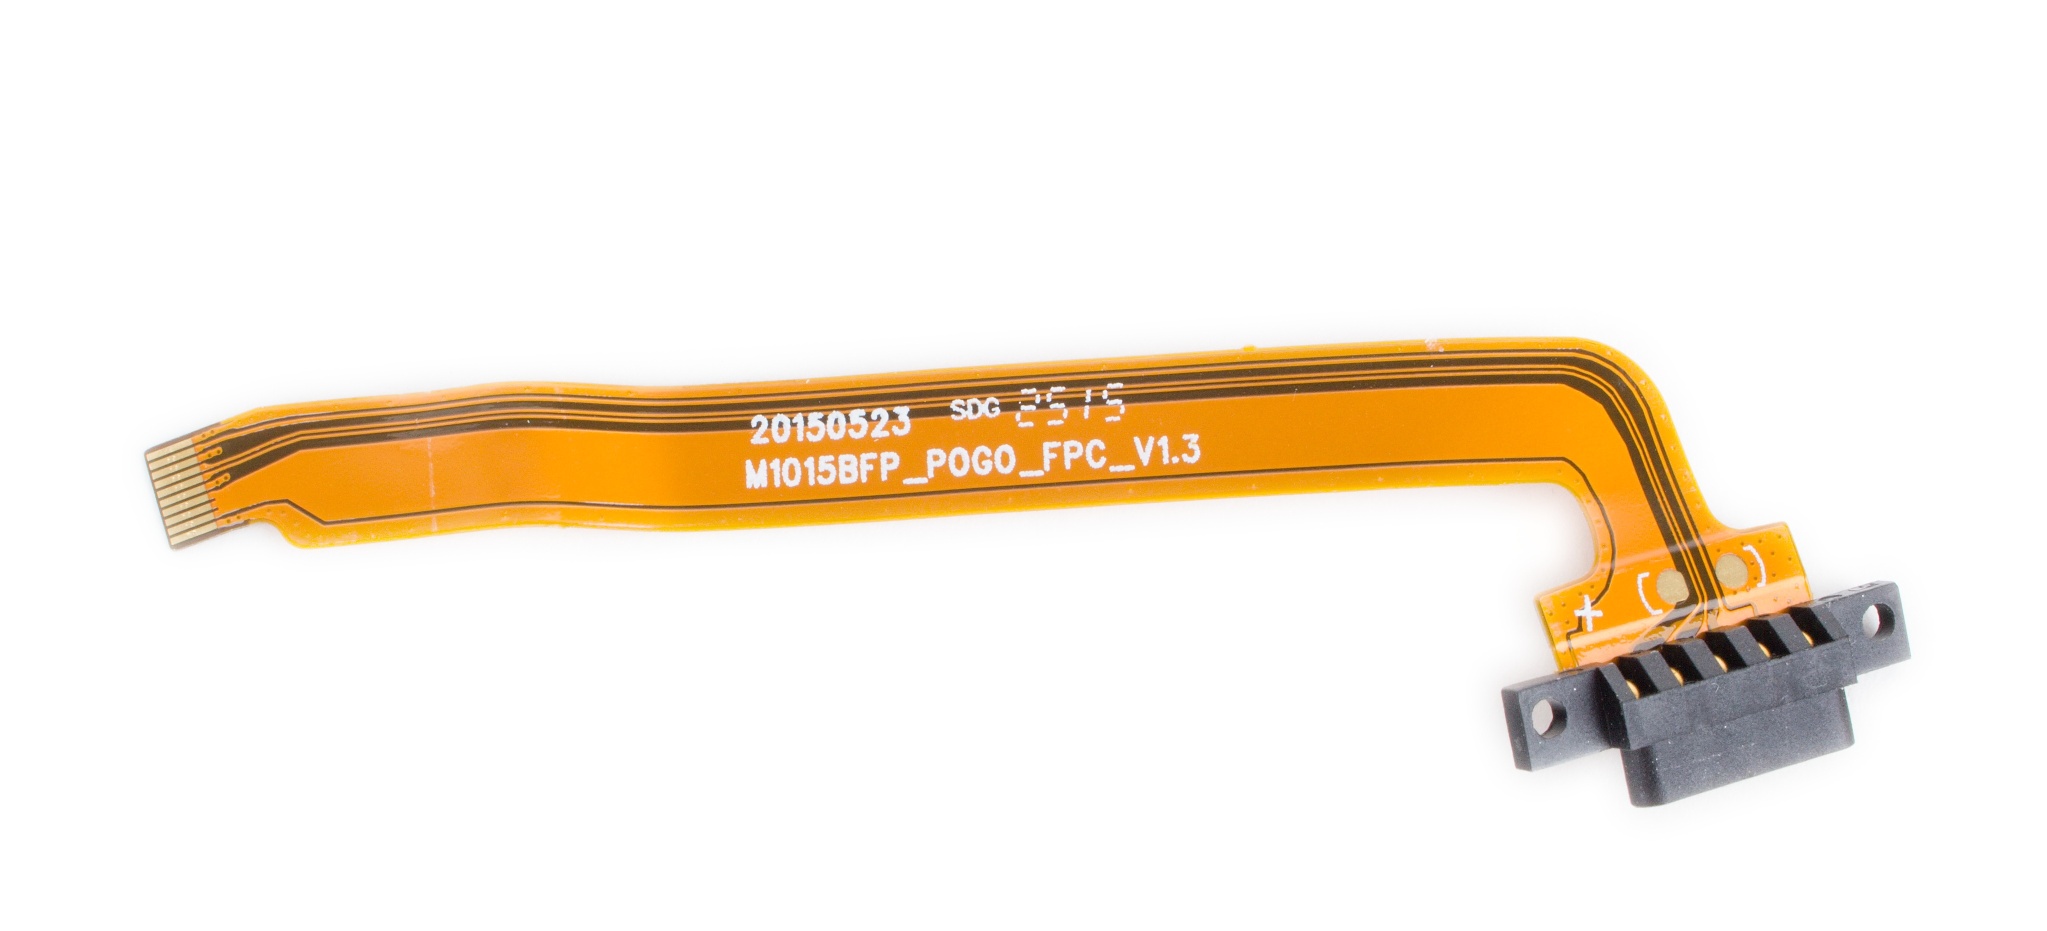 Lenovo Miix 300 flex kabel M1015BFP